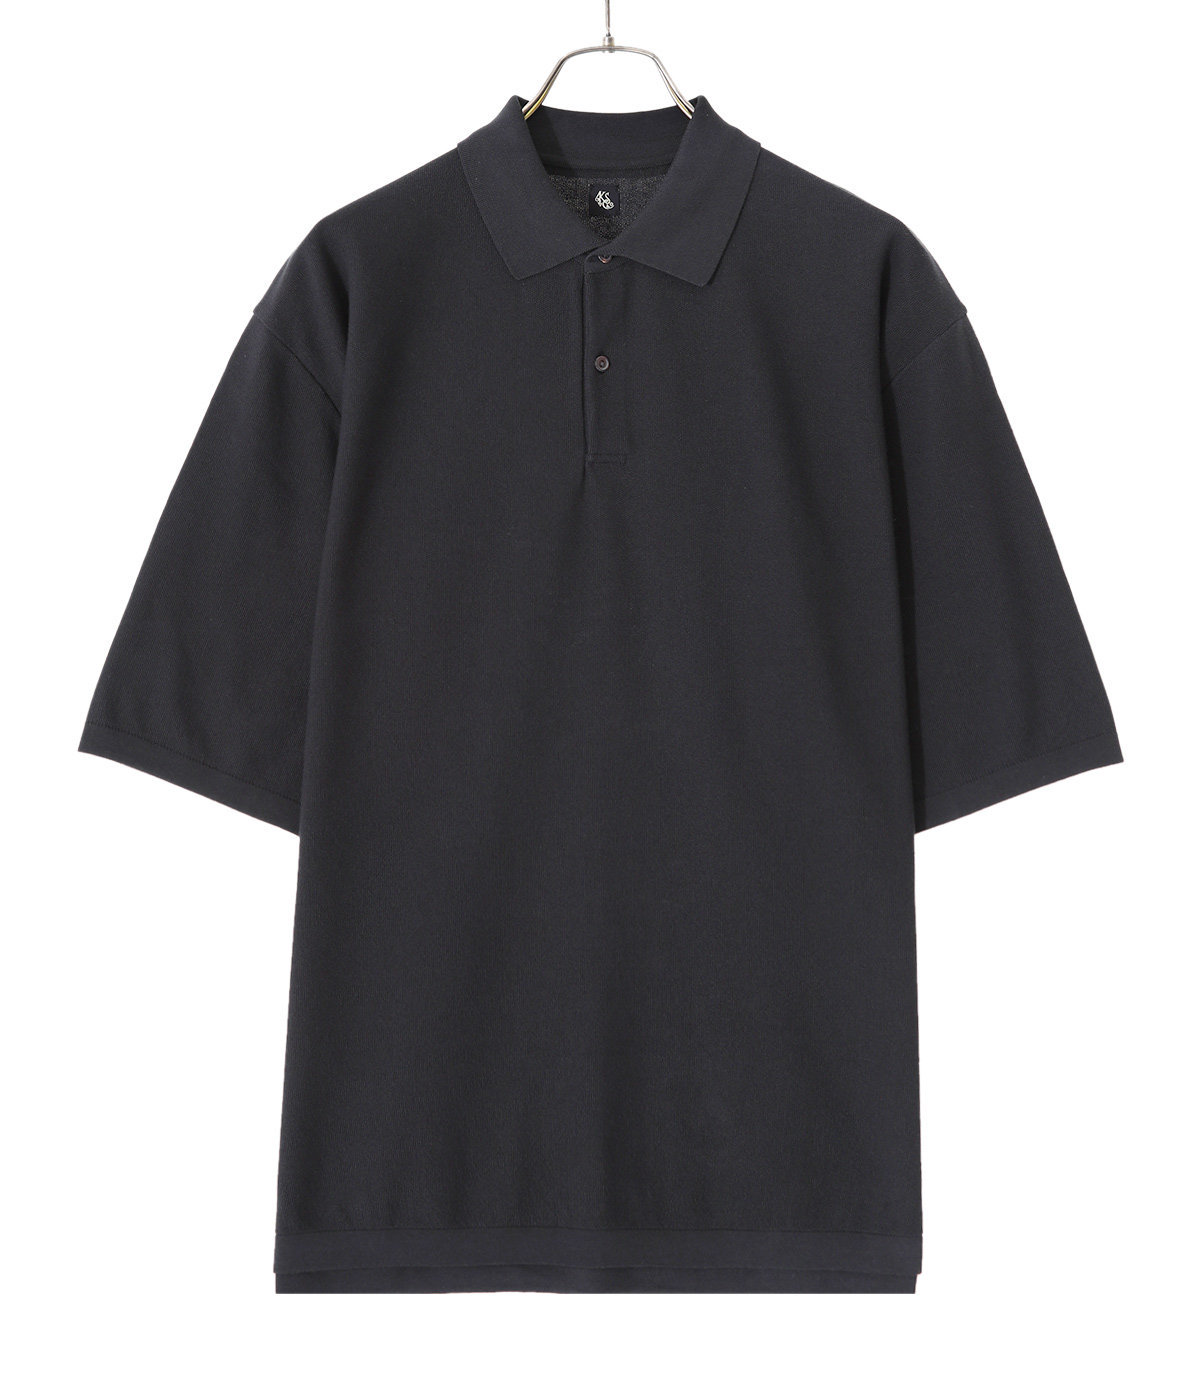 KAPTAIN SUNSHINE(キャプテンサンシャイン) Polocollar Knit Shirt / トップス ポロシャツ (メンズ)の通販 -  ARKnets(アークネッツ) 公式通販 【正規取扱店】